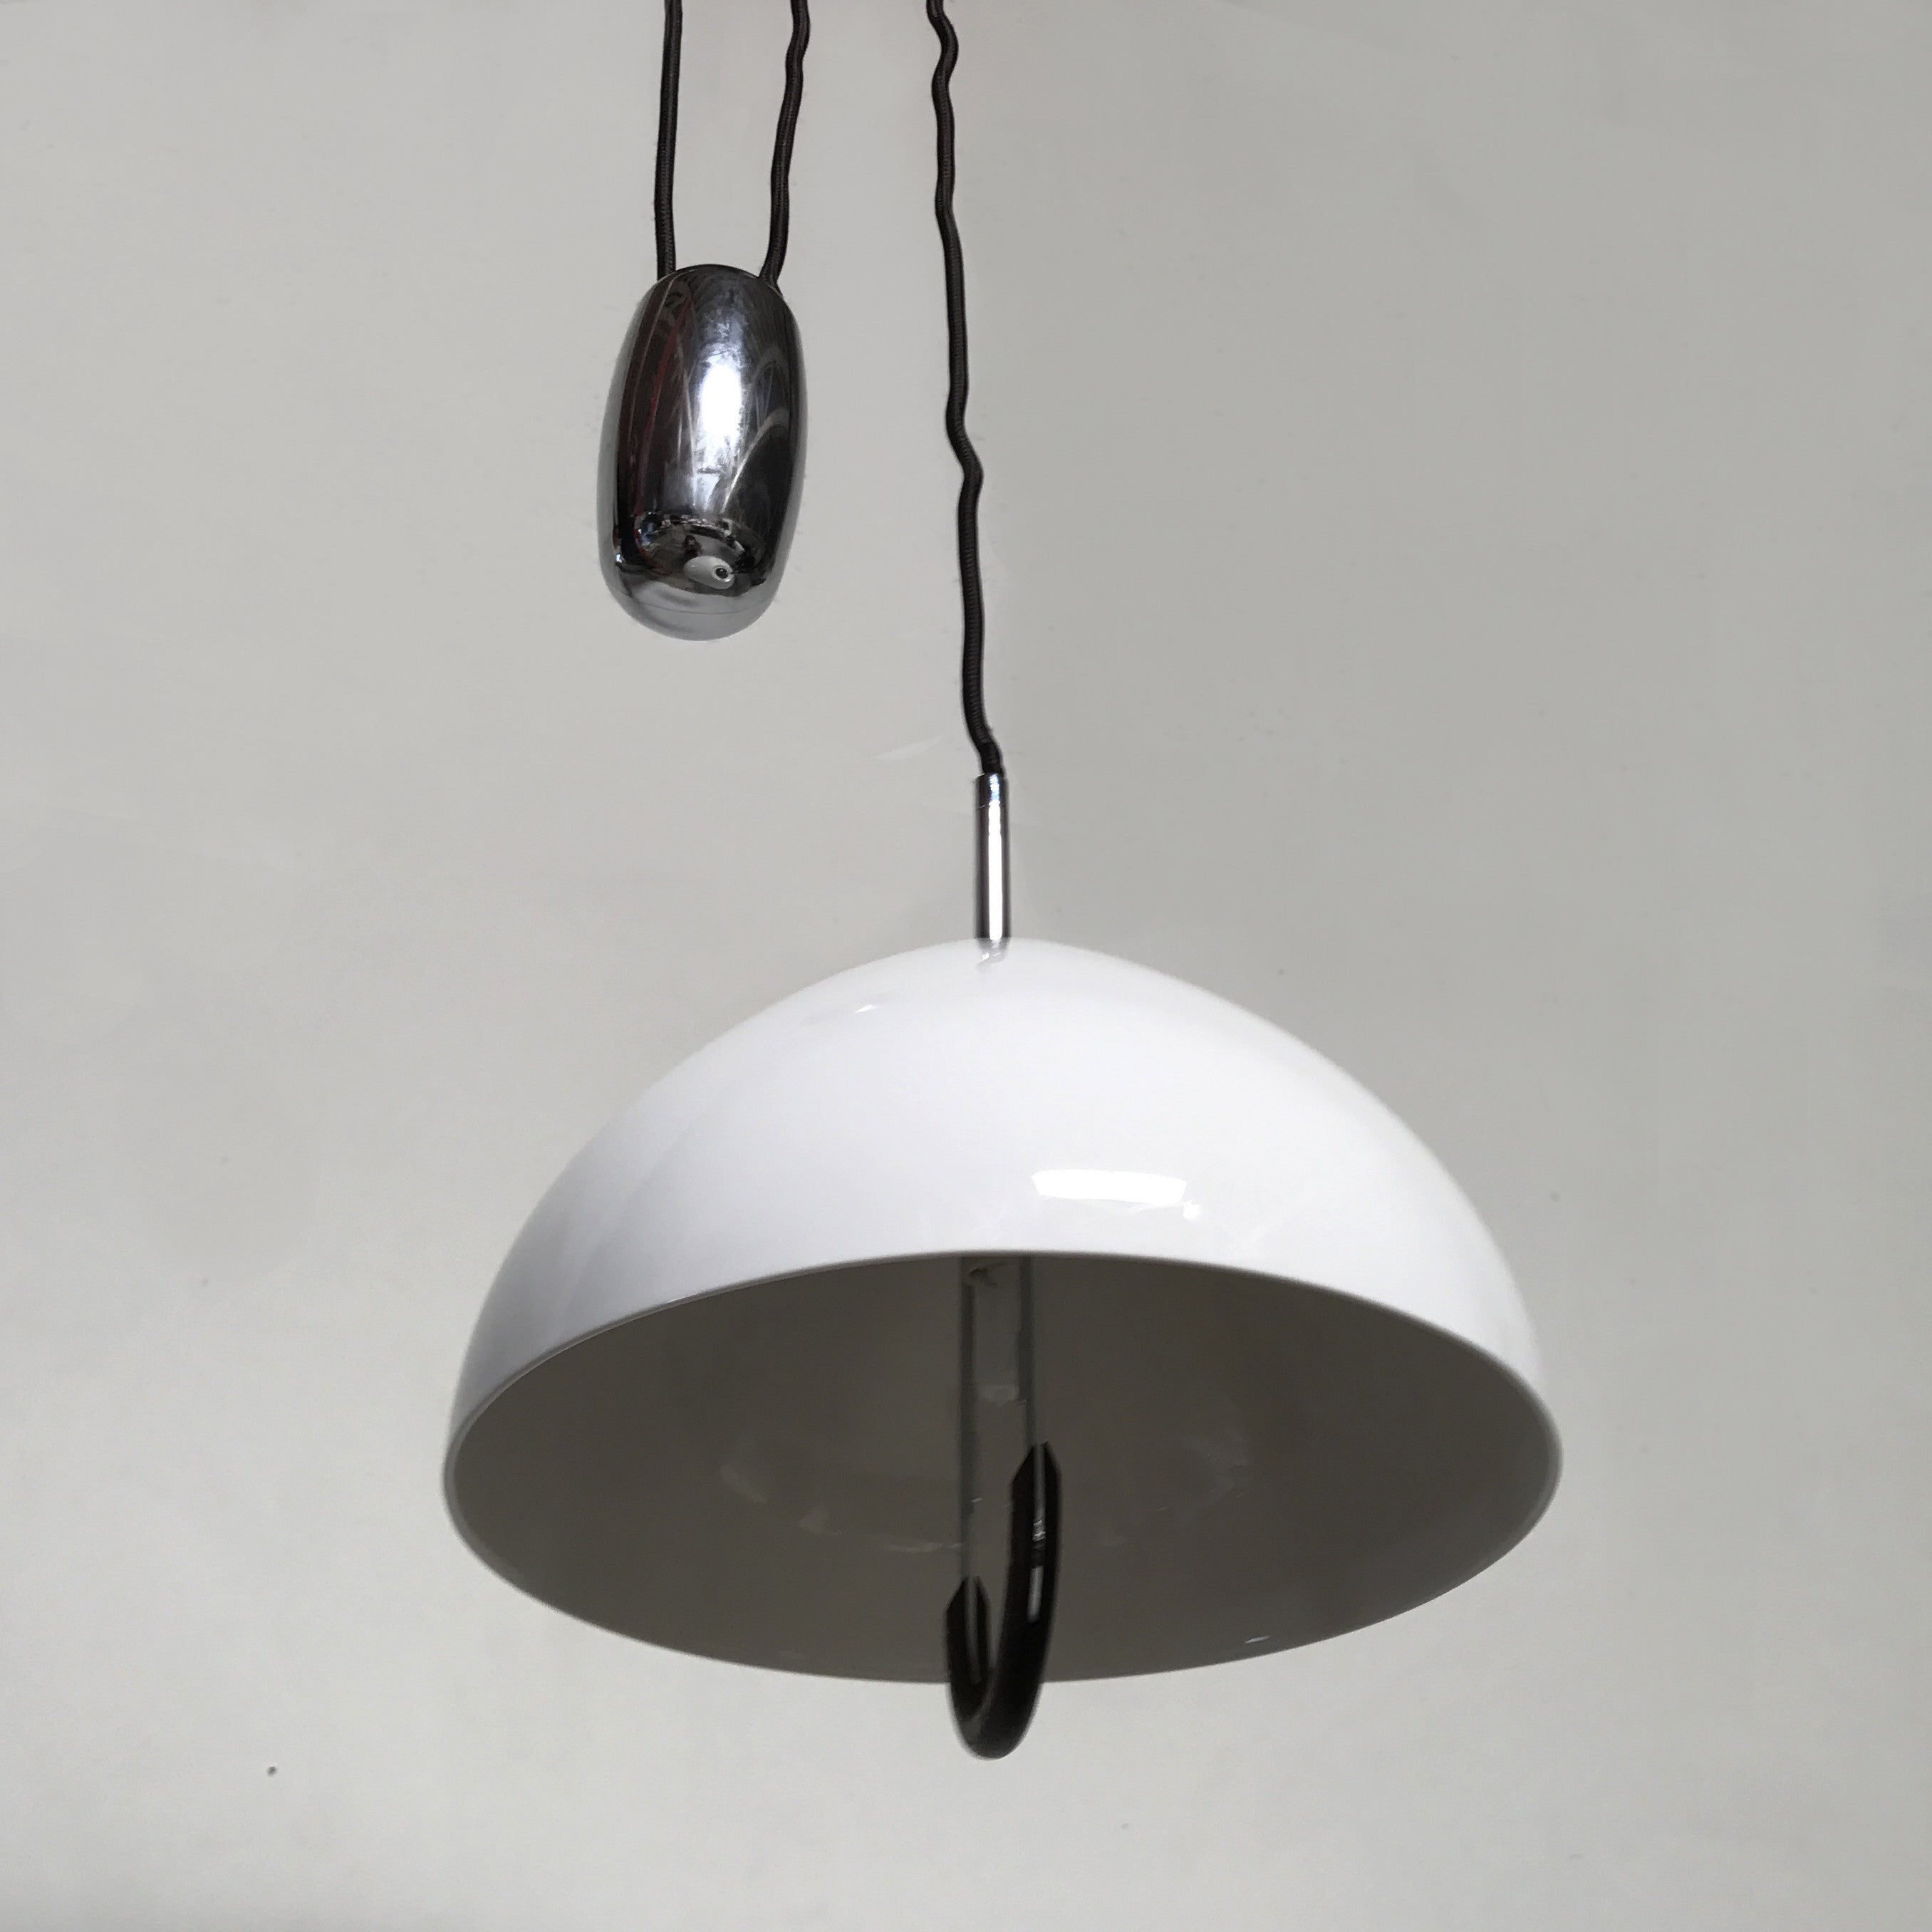 Hanging light 'Sophie's' by Tobias Grau